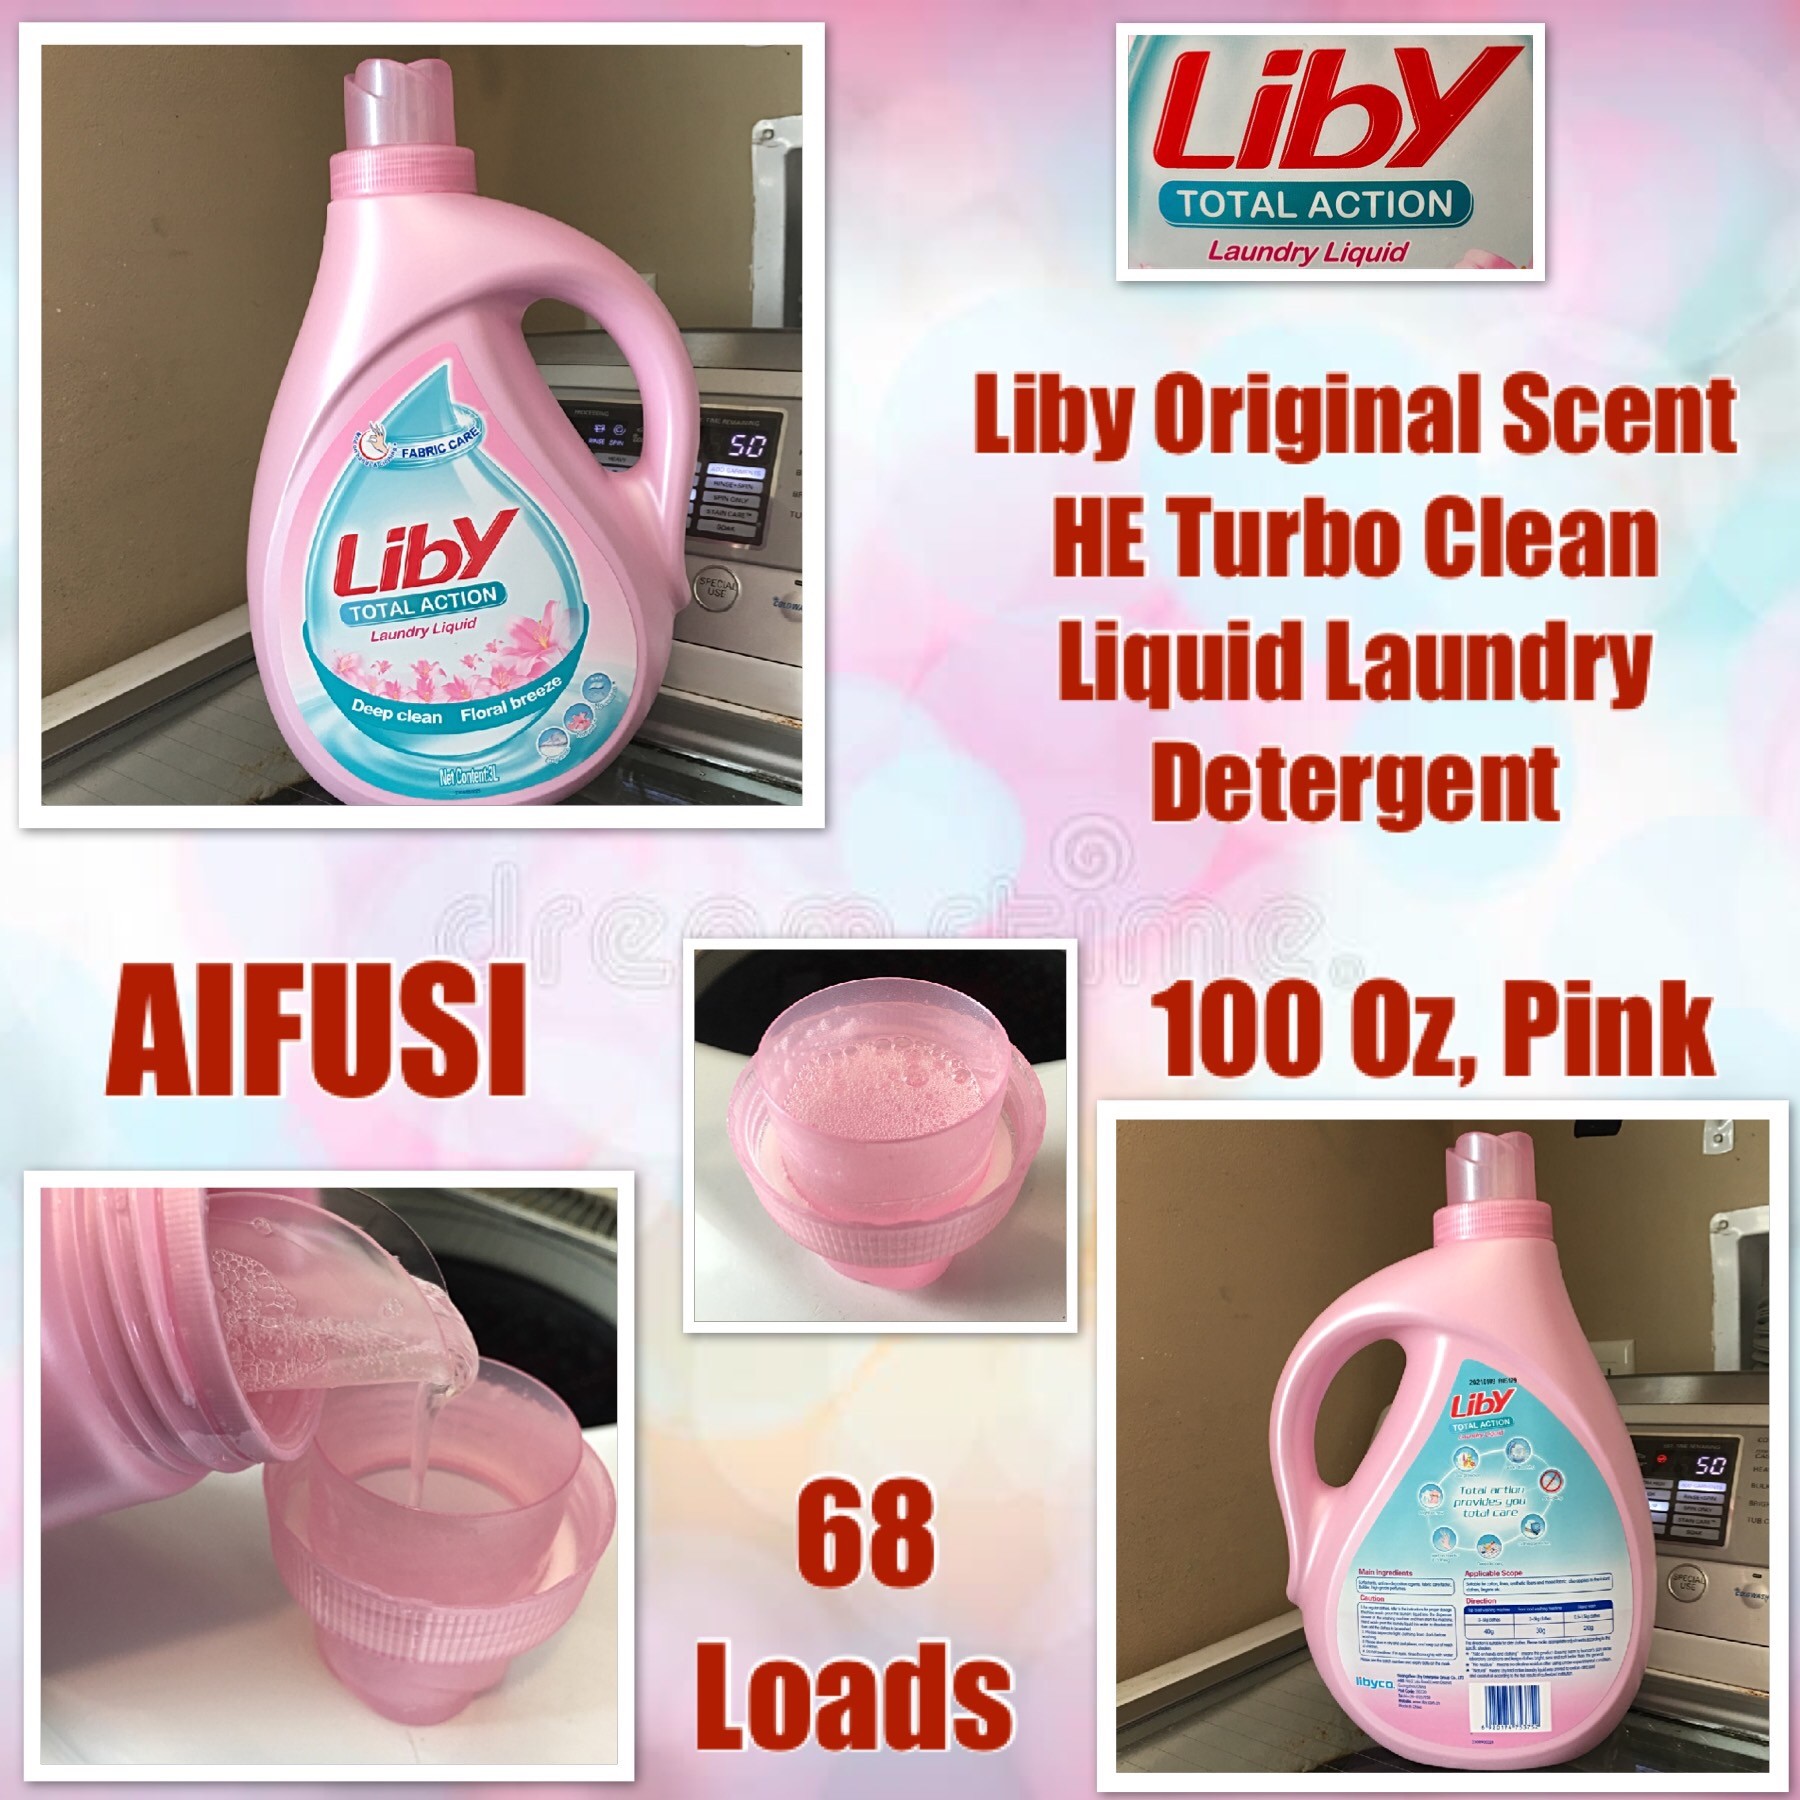 Liby Original Scent HE Turbo Clean Liquid Laundry Deteregent (68 Loads), 100 Oz, Pink